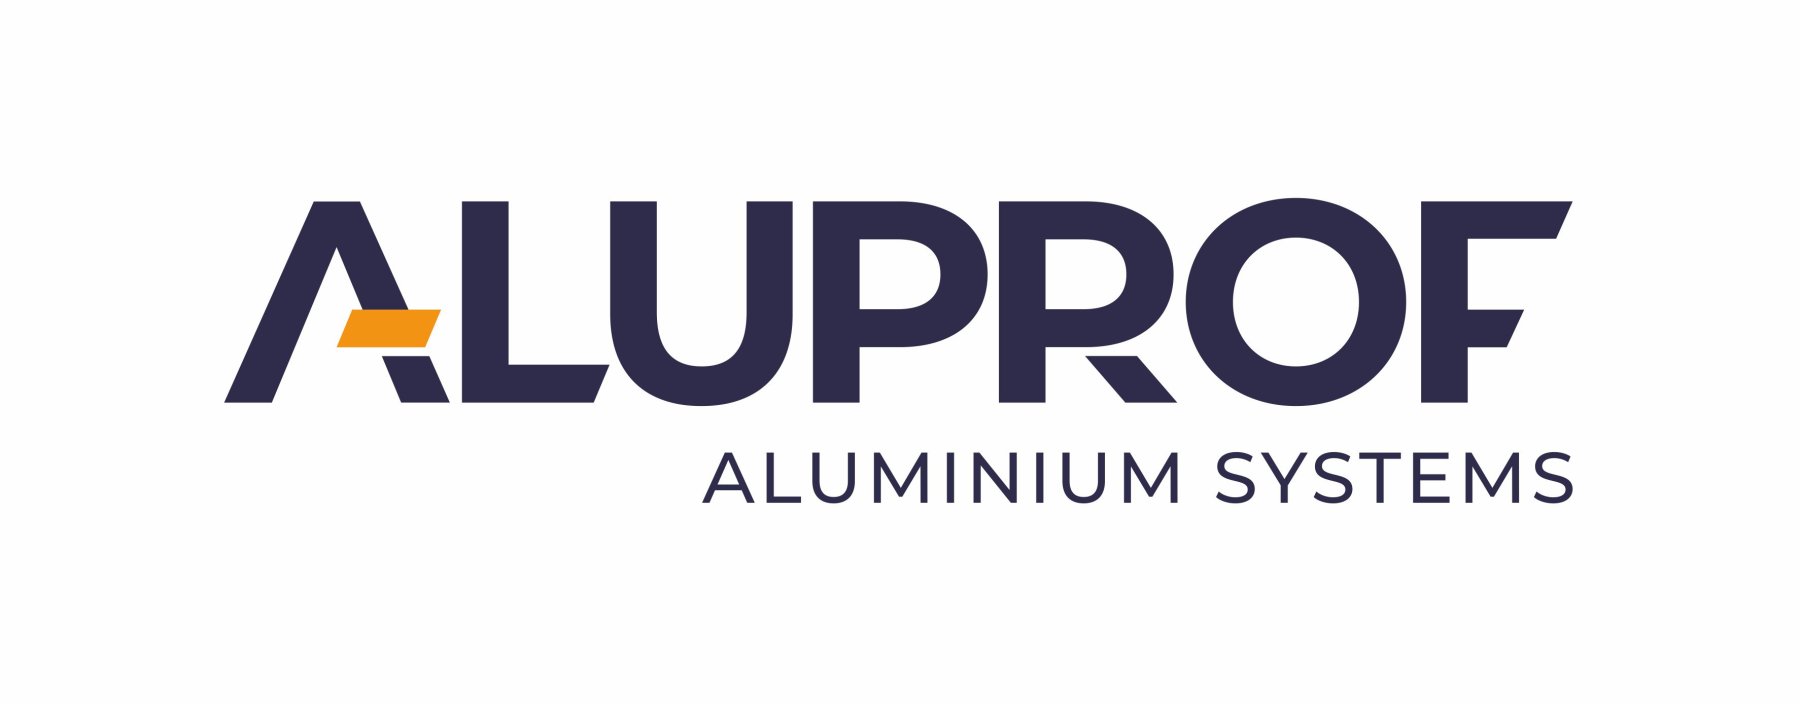 InHaus.cz : logo_aluprof_aluminiumsystems-logo